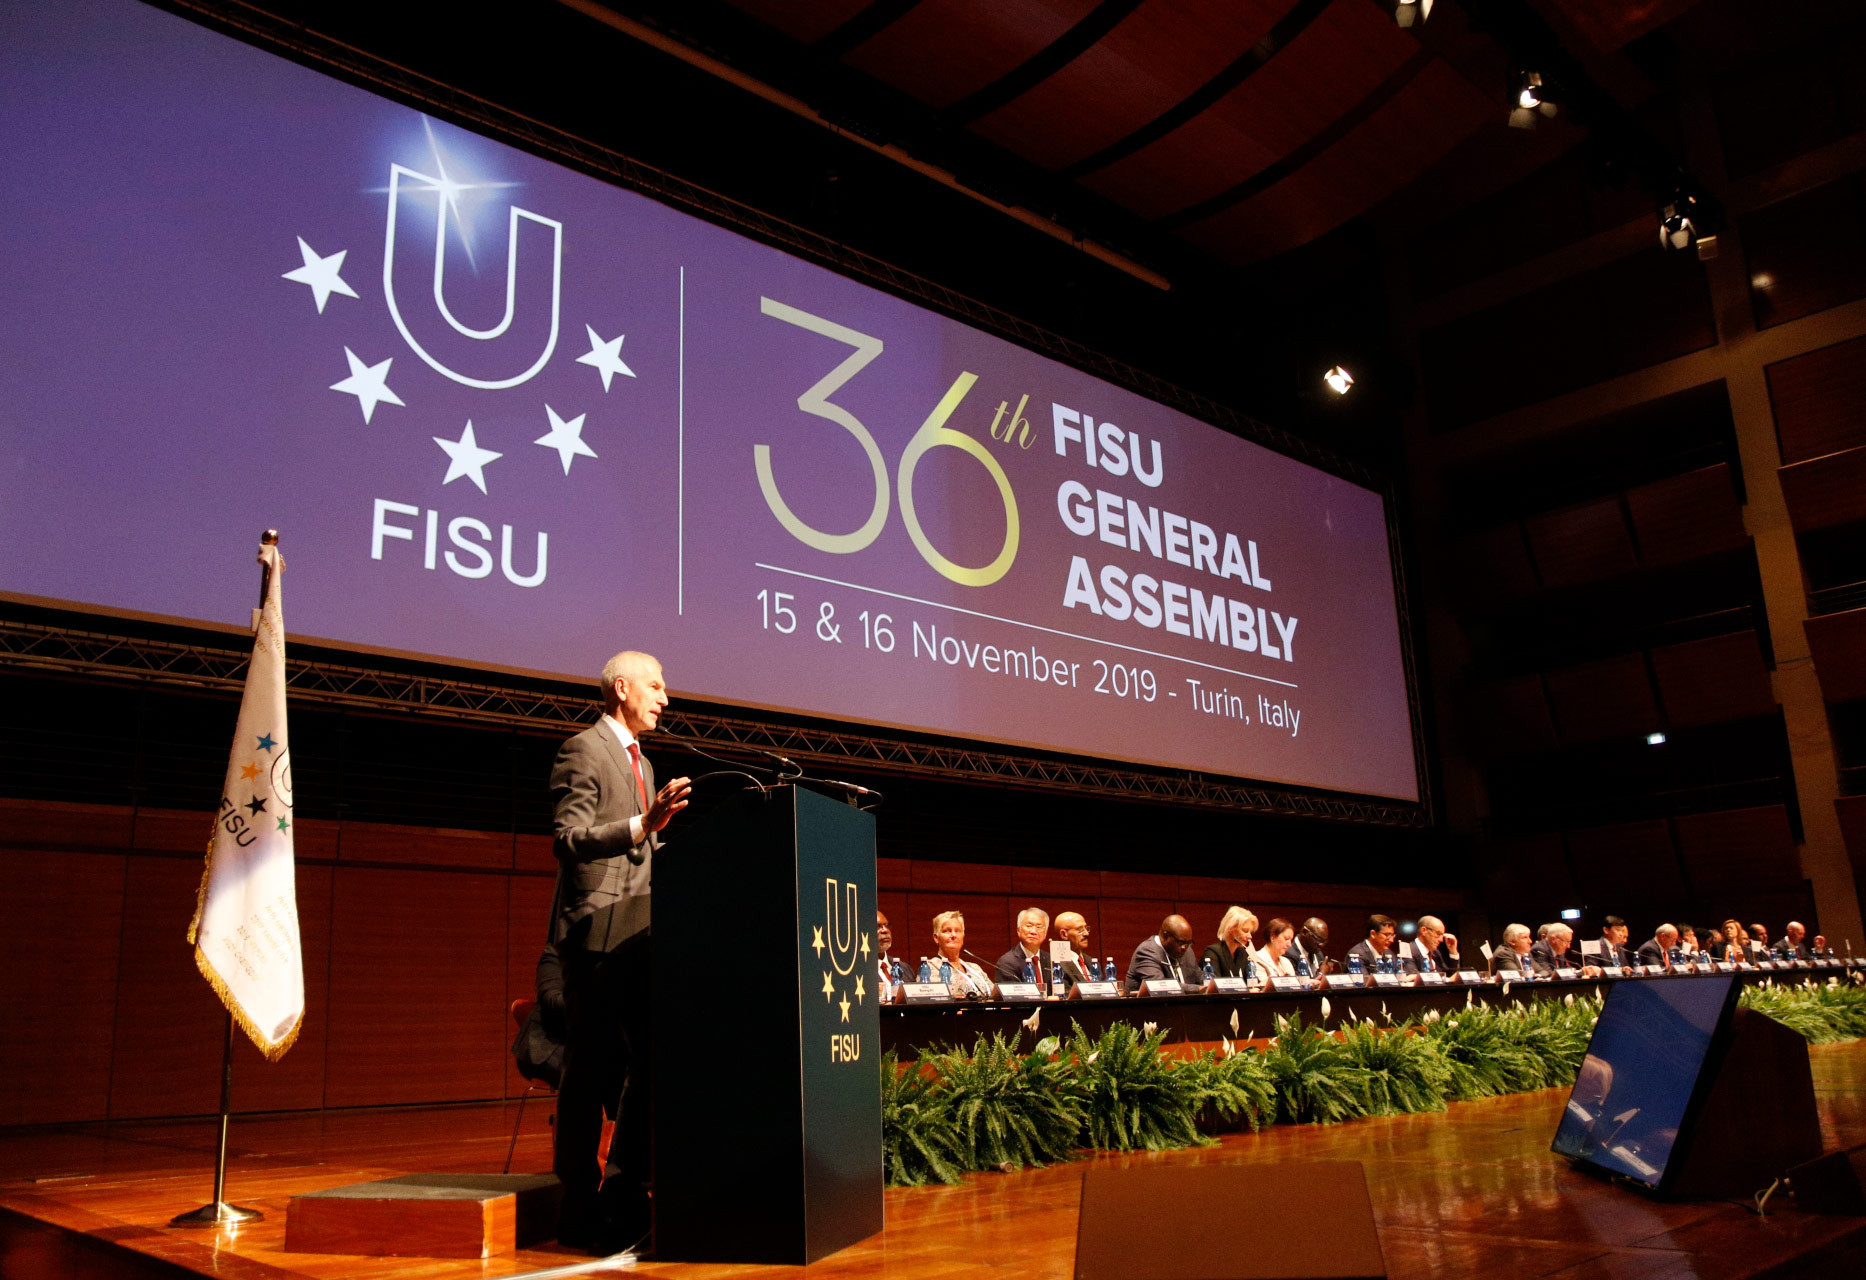 Opening day of FISU General Assembly highlights progress under President Oleg Matytsin